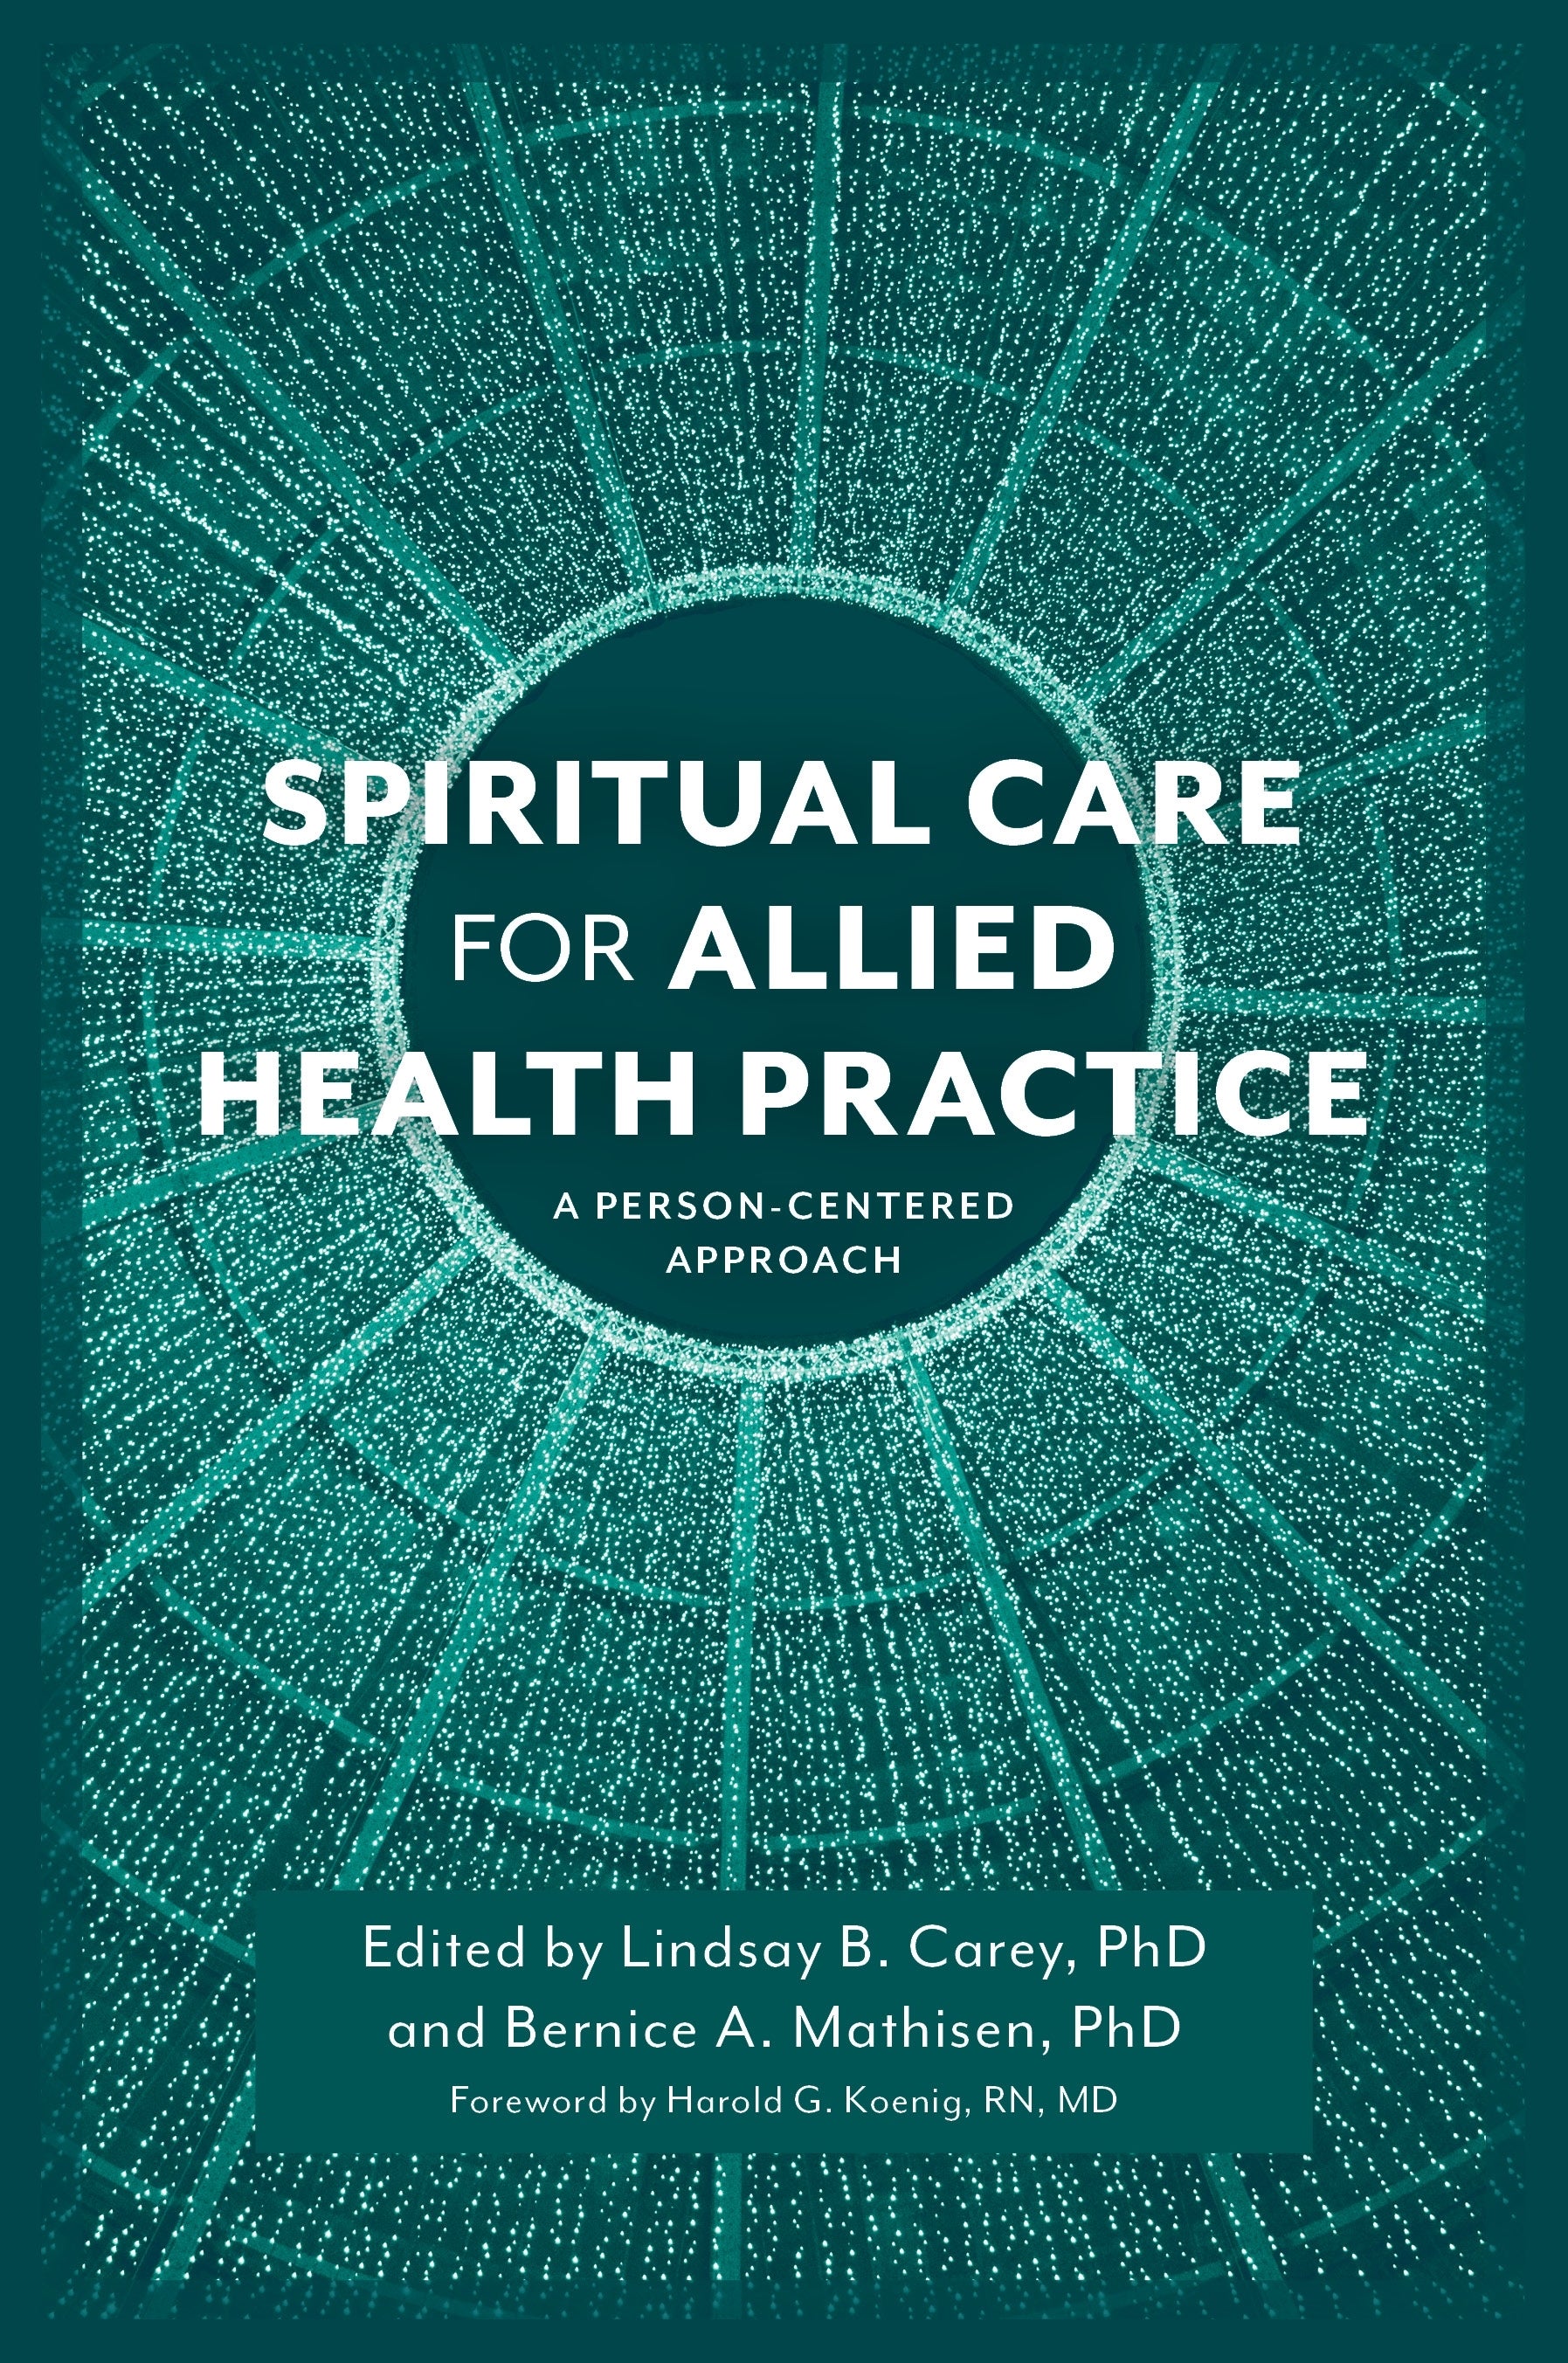 Spiritual Care for Allied Health Practice by Lindsay B. Carey, Bernice A. Mathisen, Harold Koenig